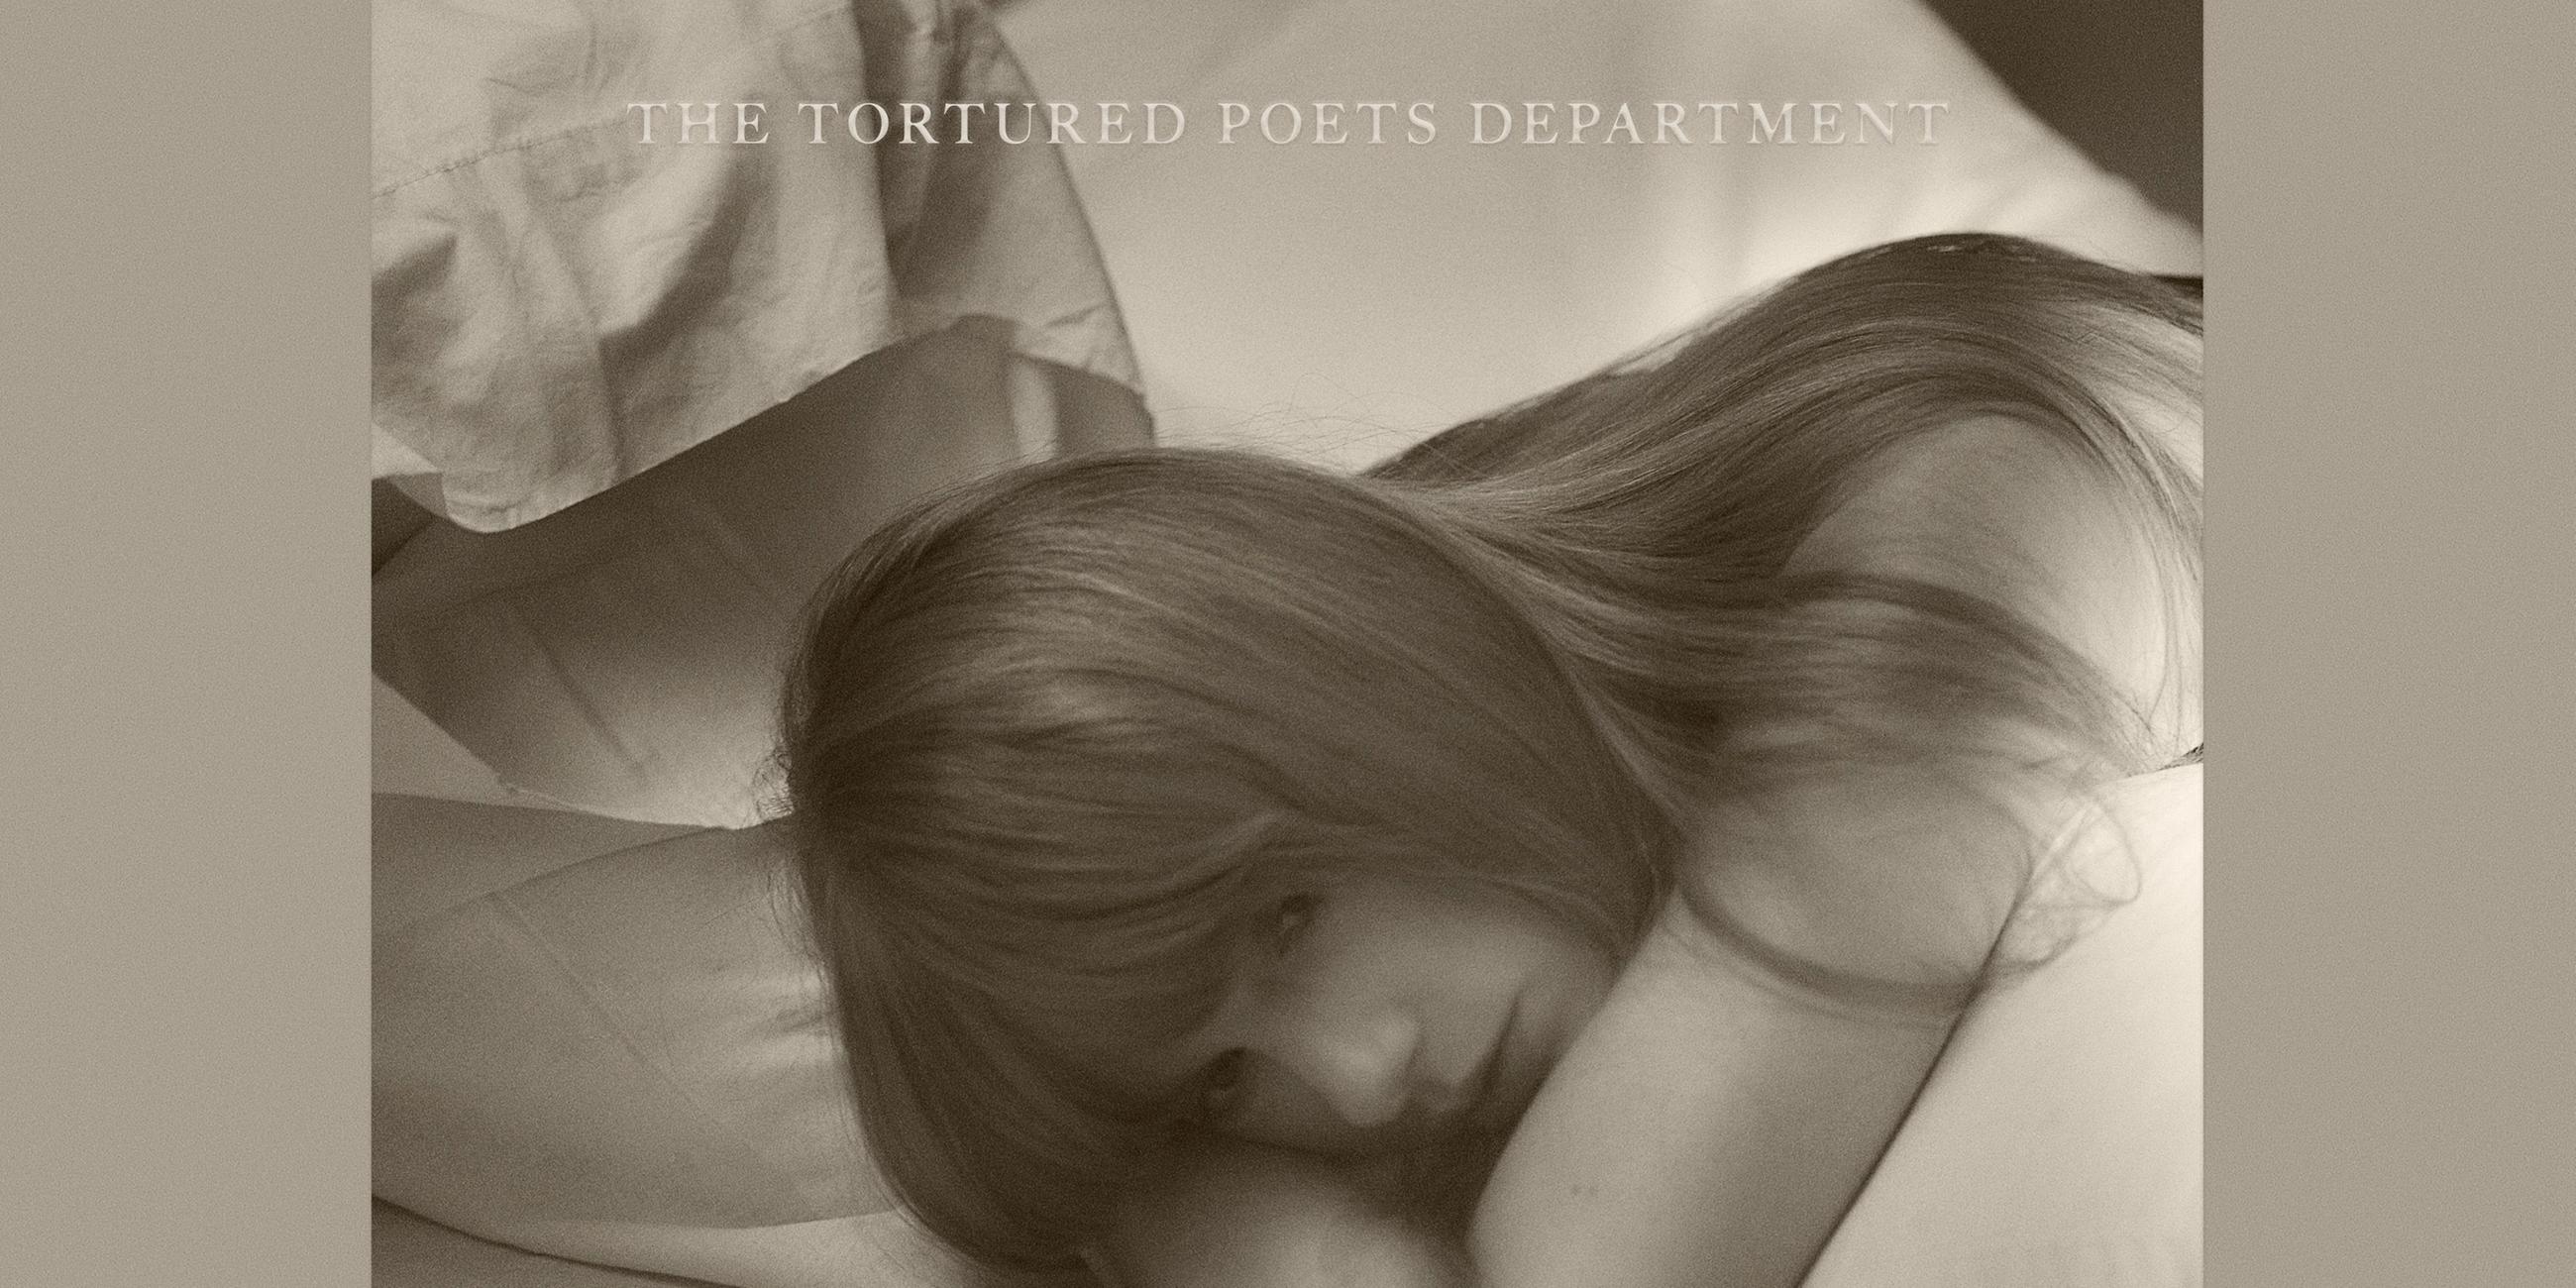 Taylor Swift - Album "The Tortured Poets Department"